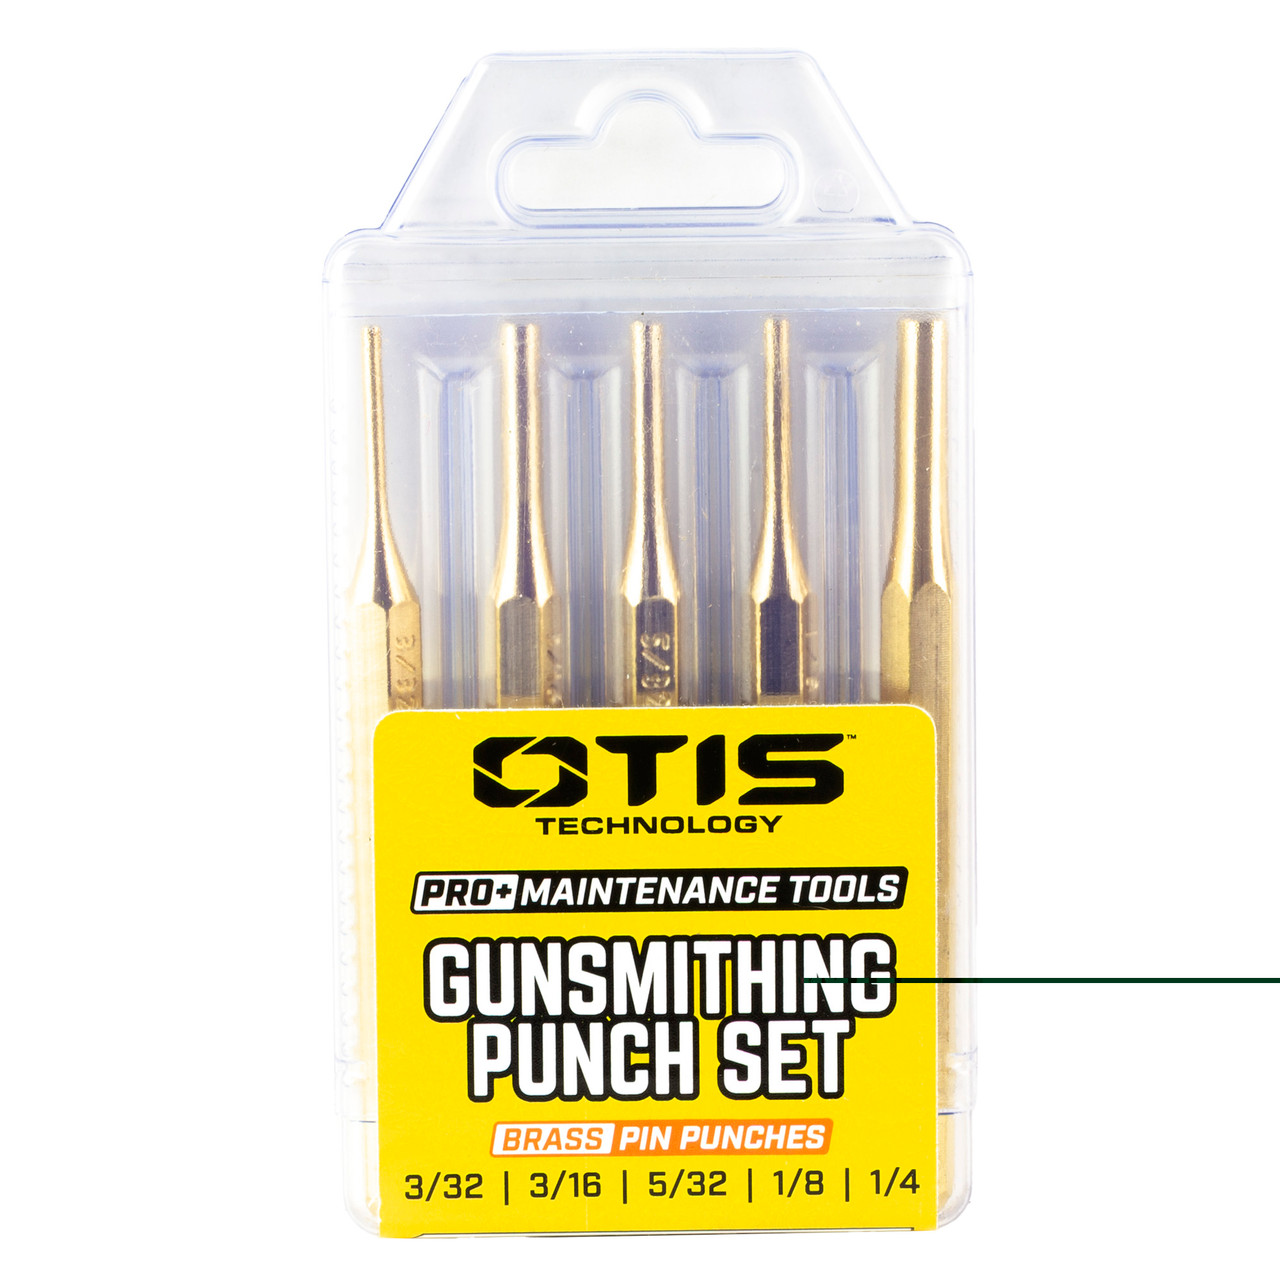 Otis Technologies FG-935 Pro Plus Gs Brass Punch Set